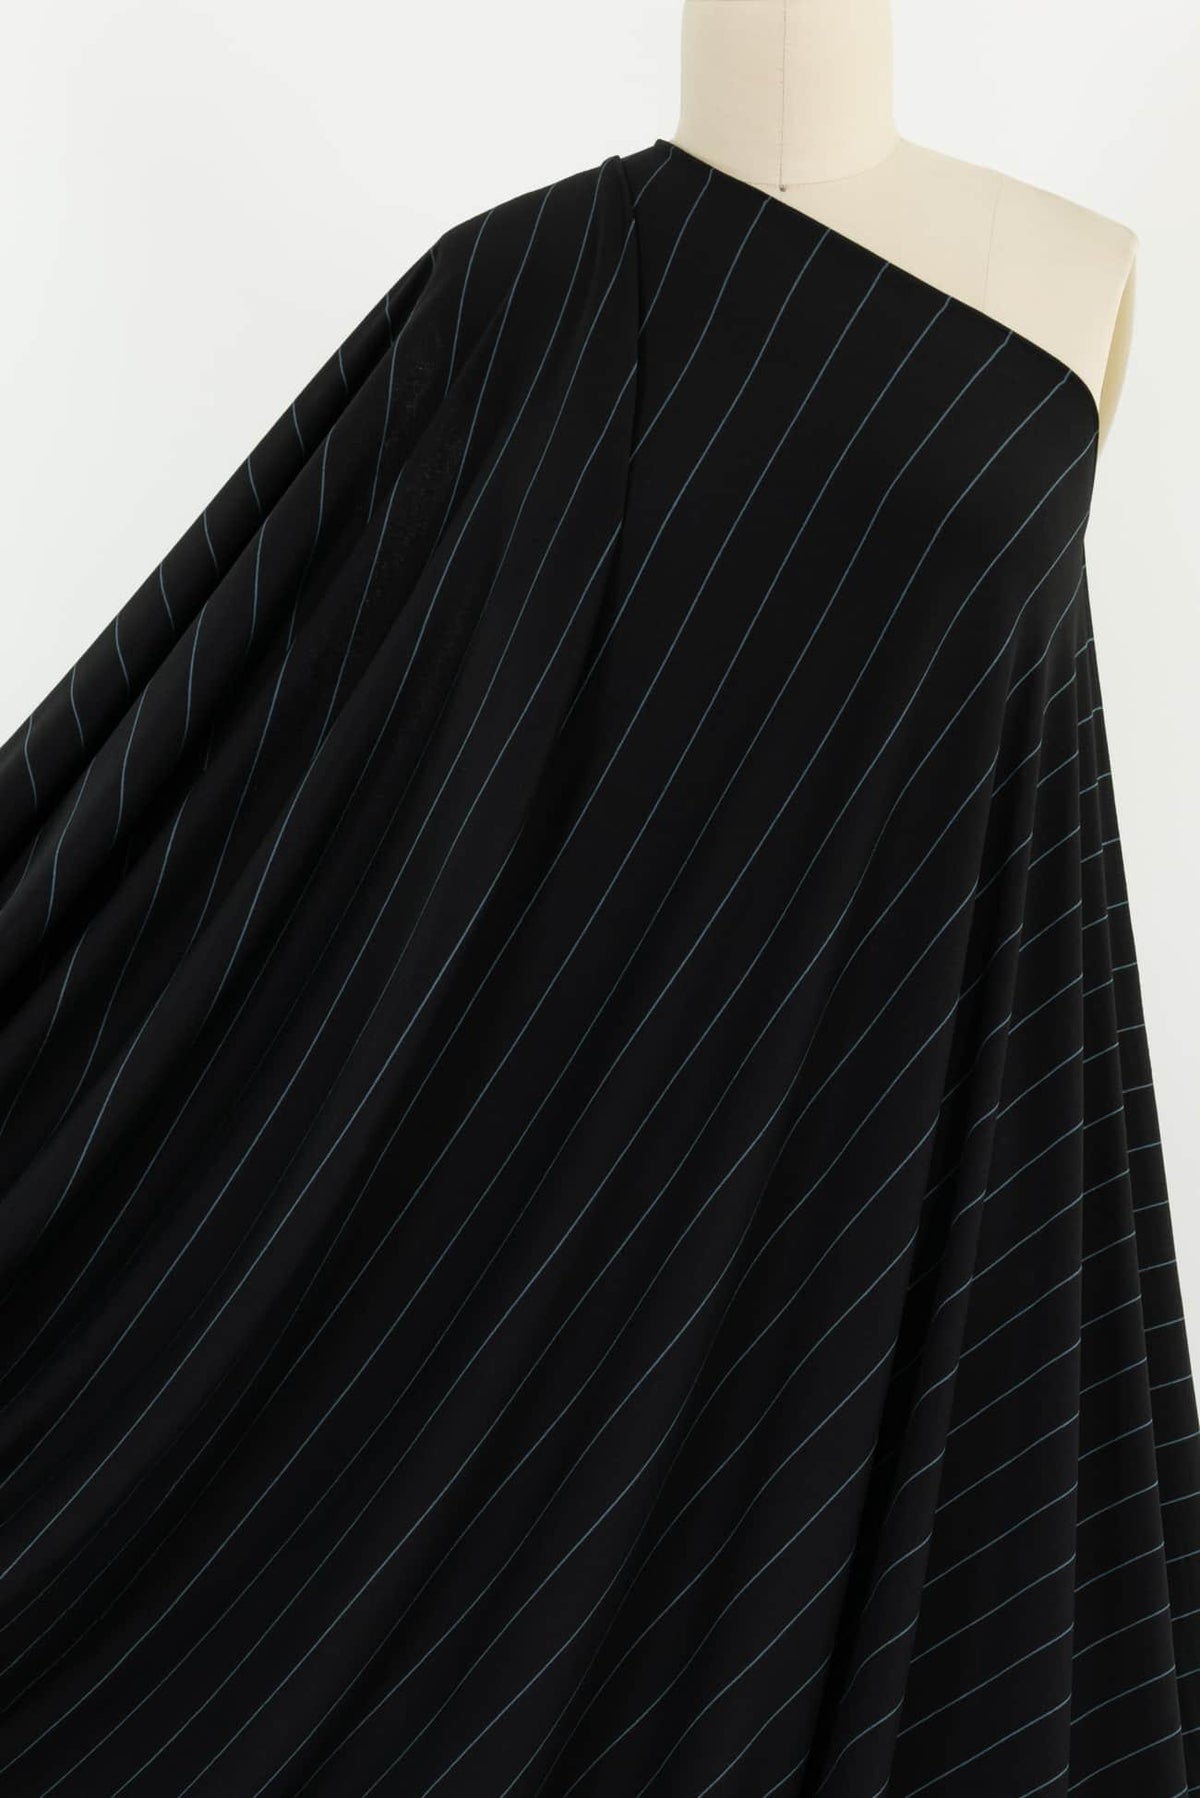 Chris Blue Stripes USA Knit - Marcy Tilton Fabrics